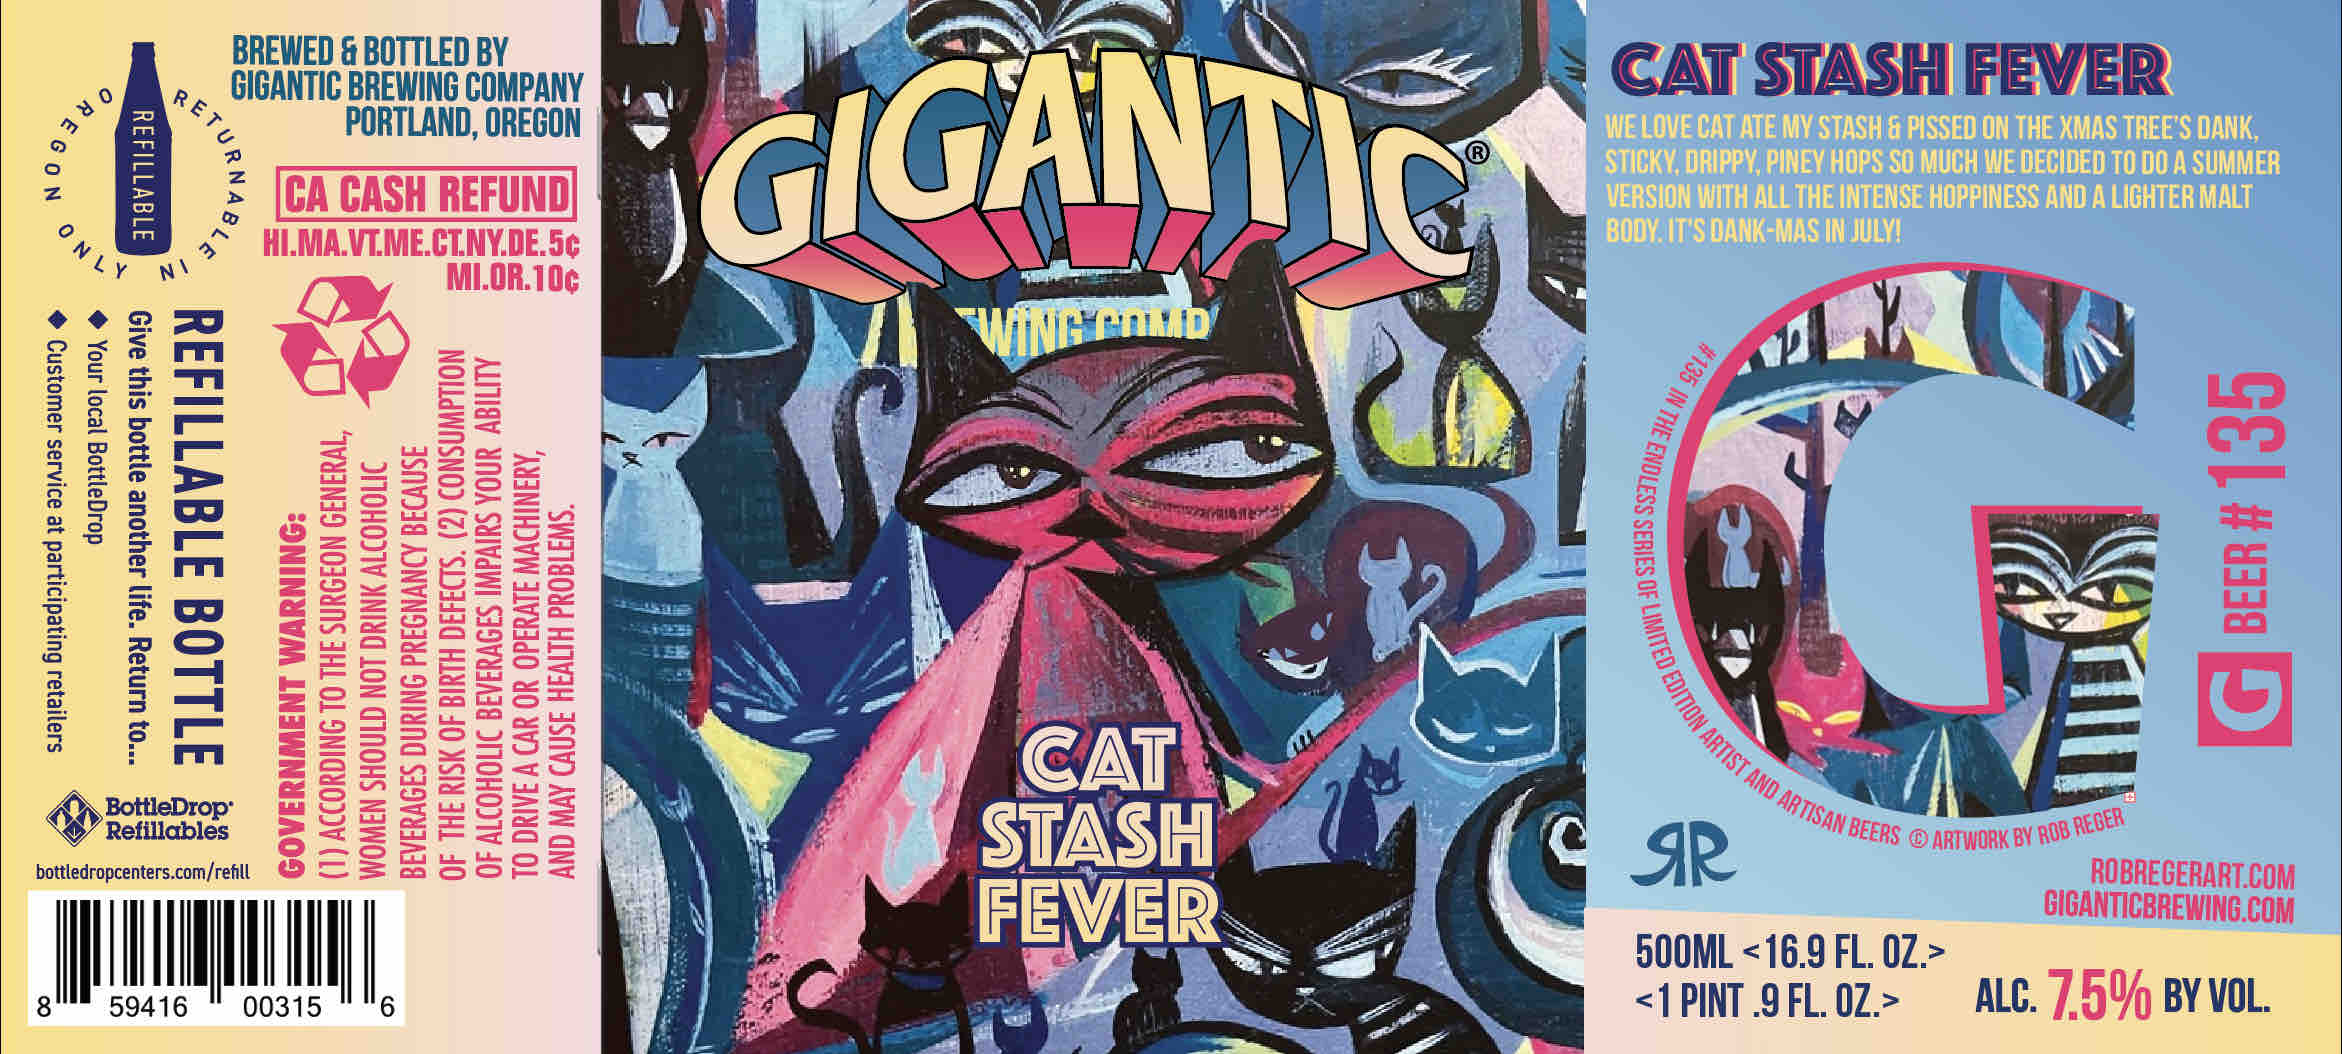 Gigantic Brewing Cat Stash Fever Label by Rob Reger